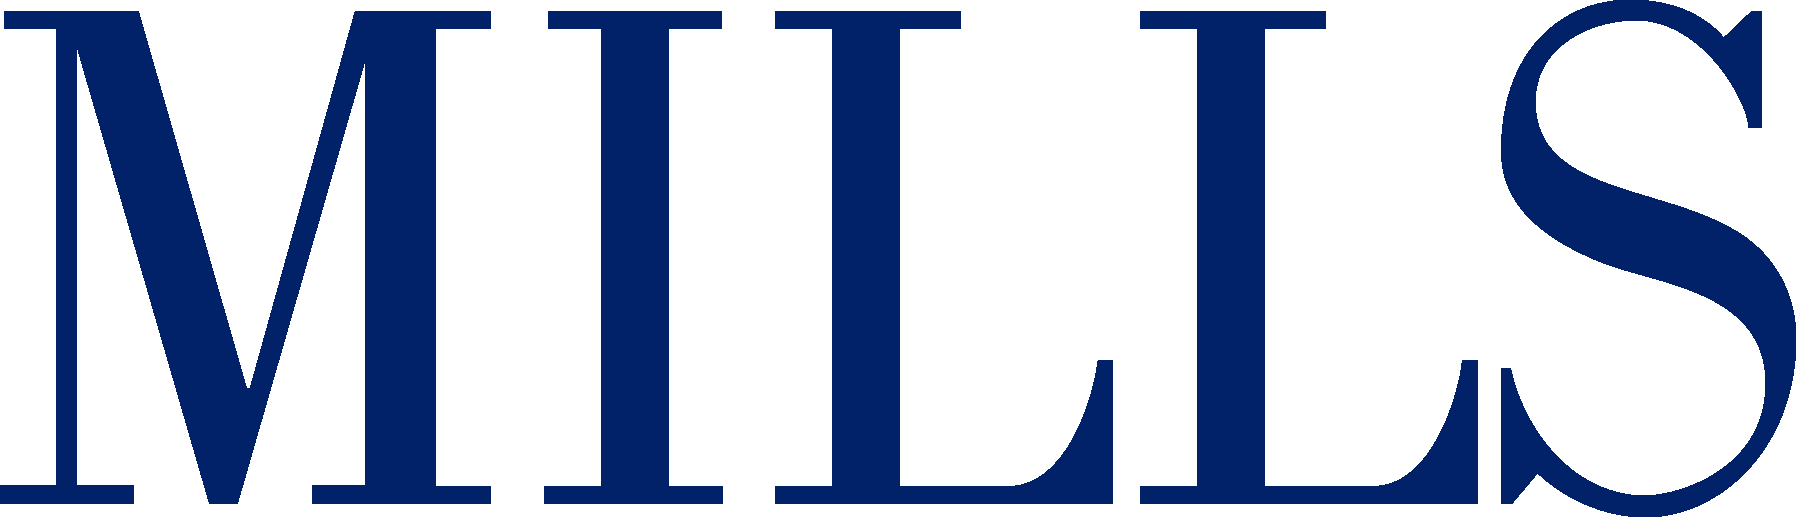 Mills-college-logo.png